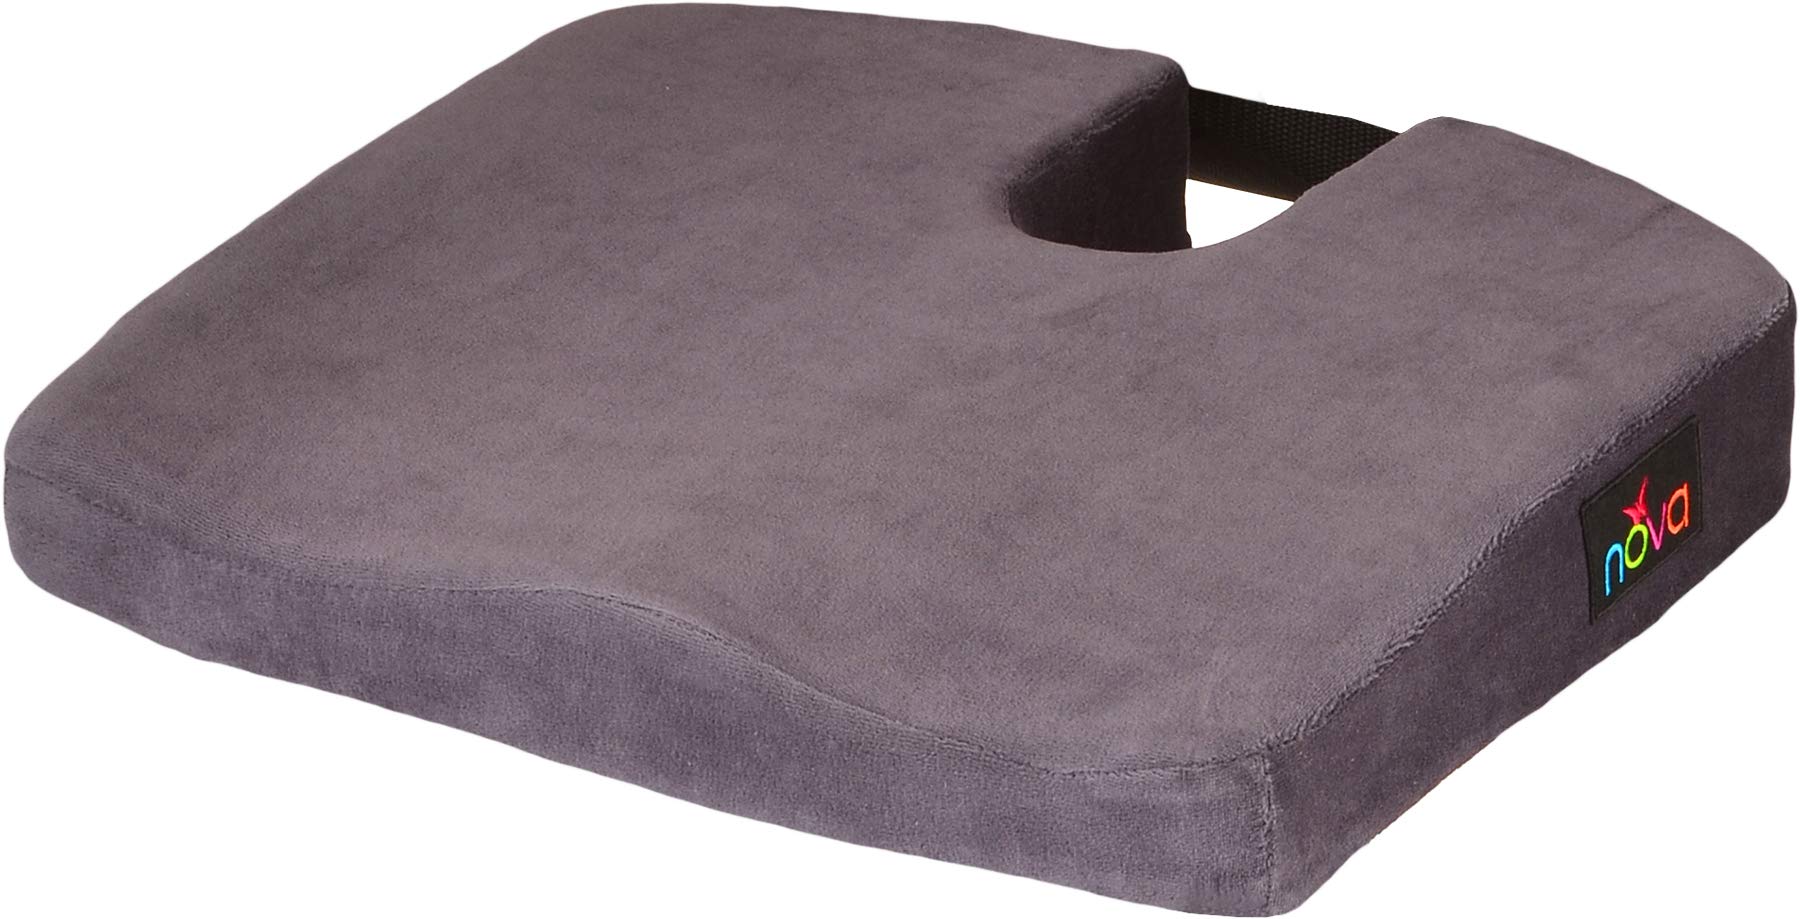 NOVA Medical Products Comfort Seat Cushion, Memory Foam Coccyx Cushion